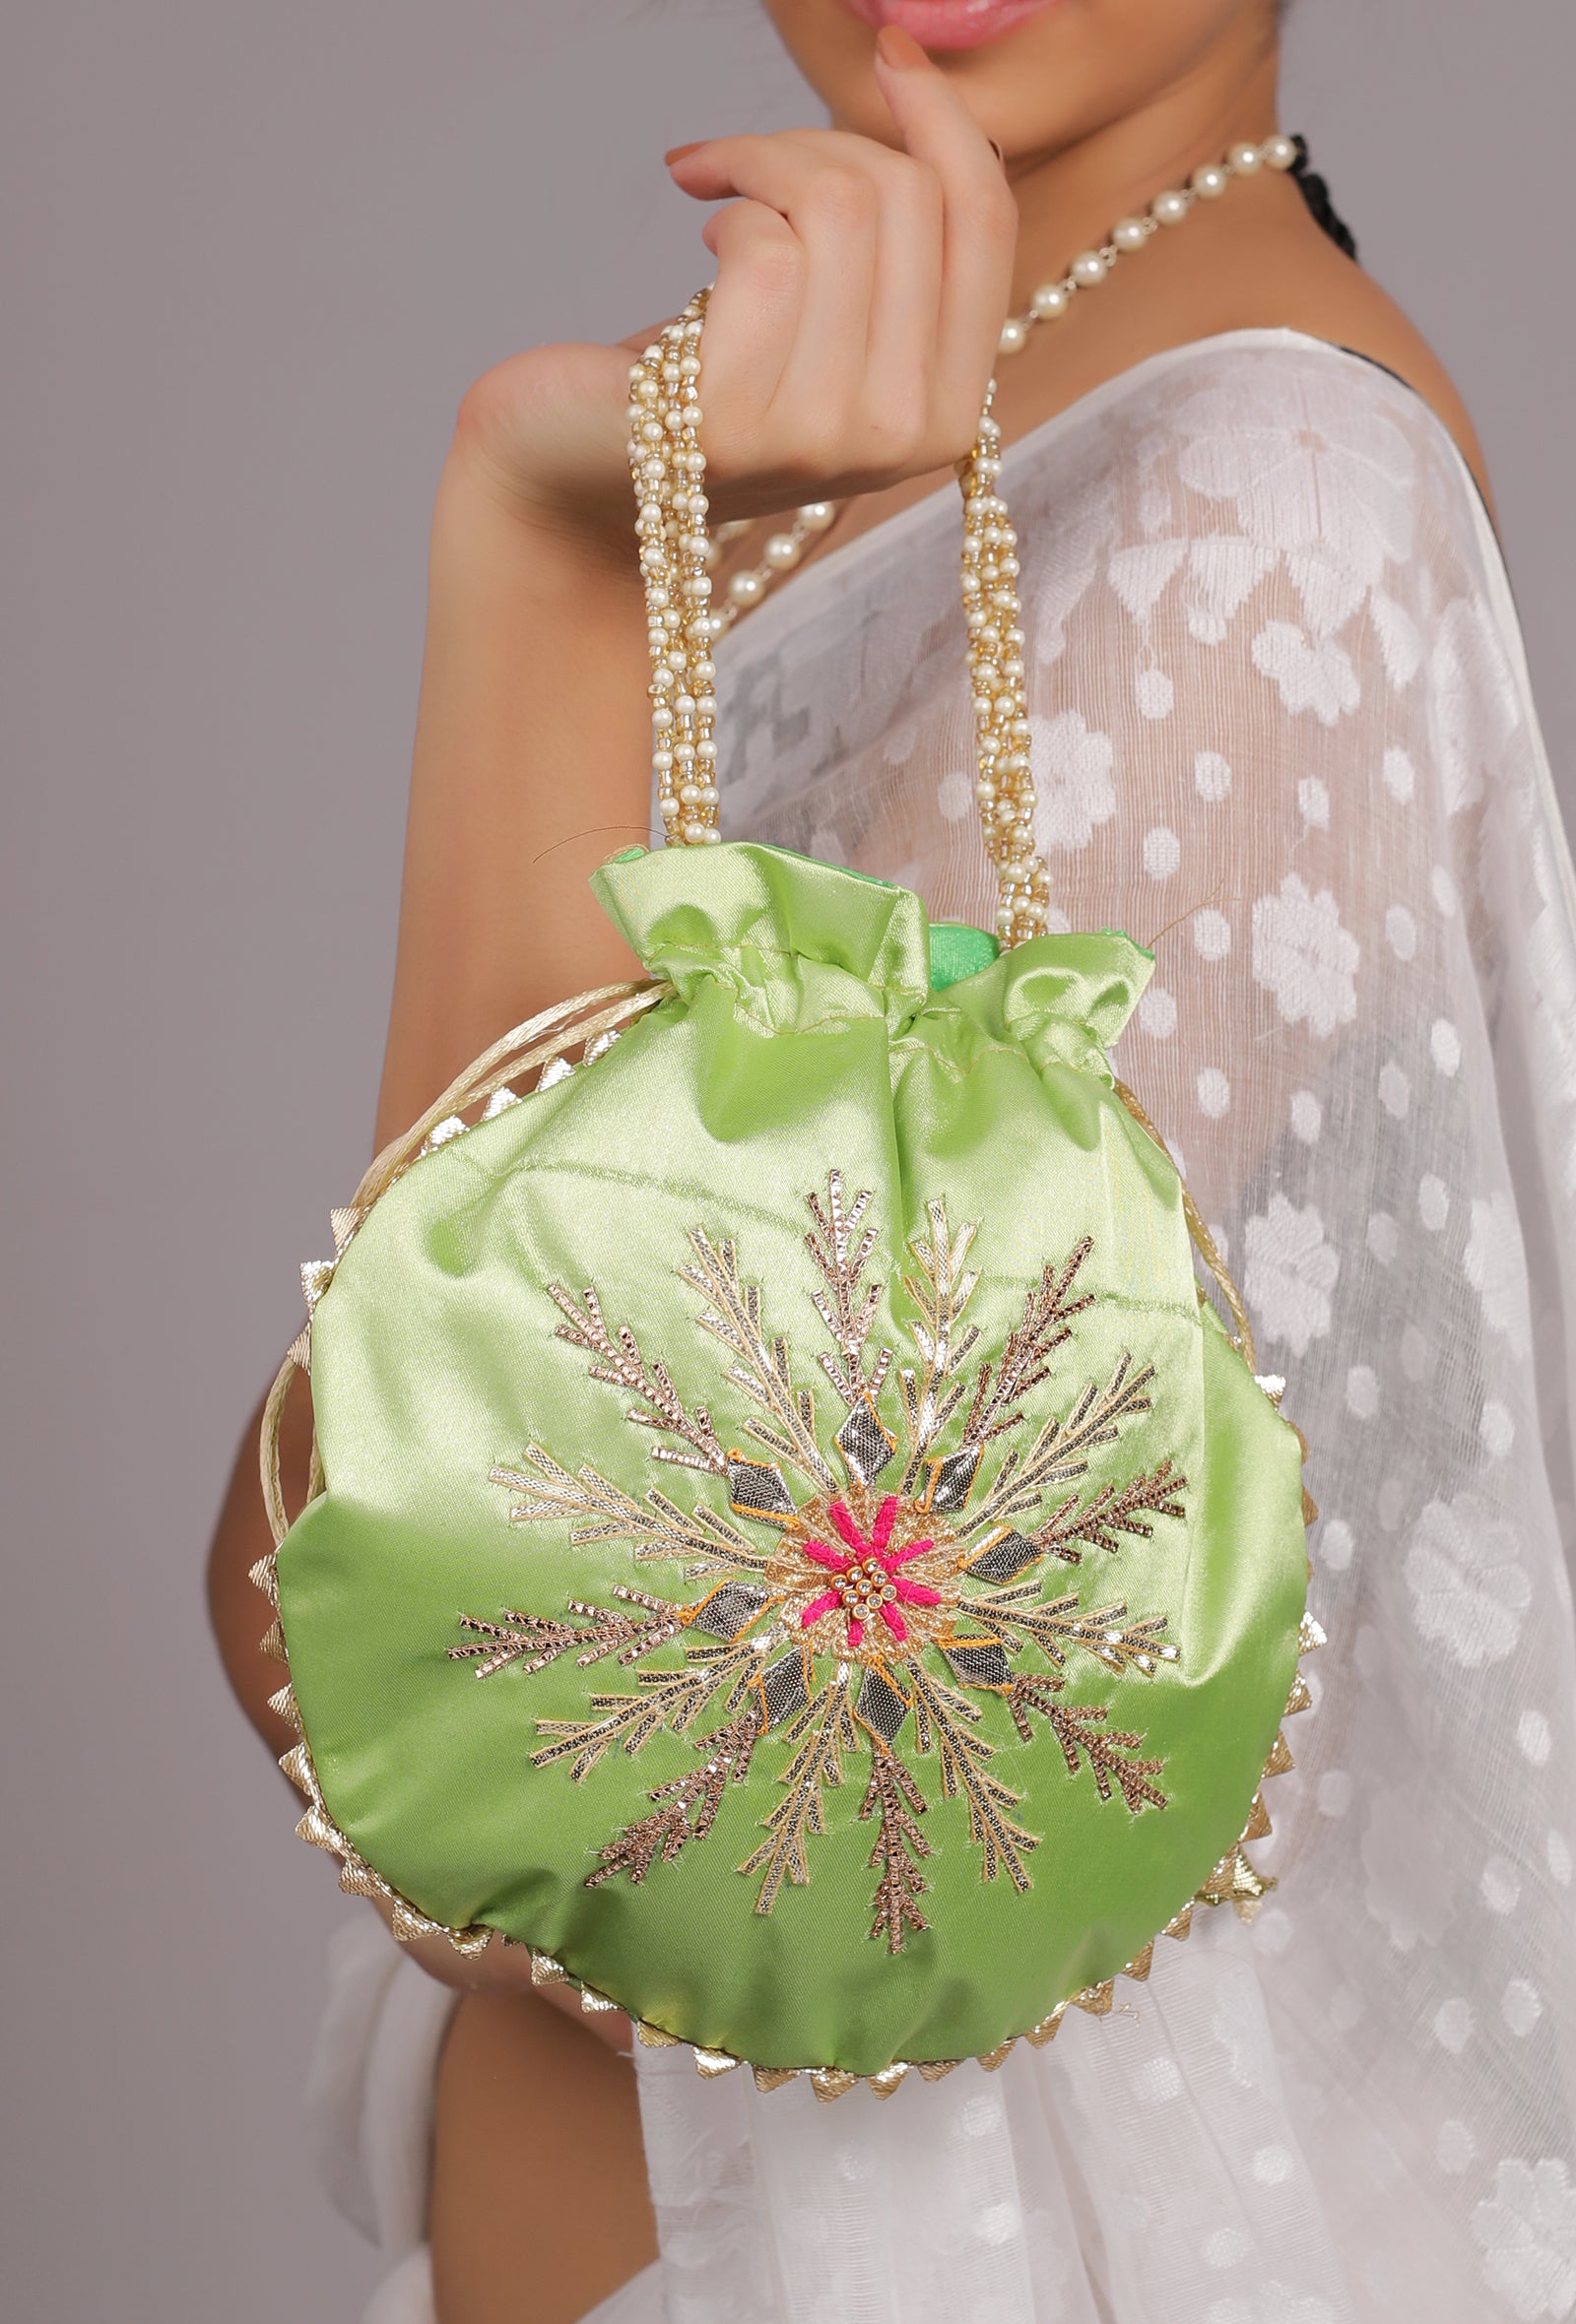 Ladies Bags: Buy Handbags, Purse for Women Online at Best Price- Cippele